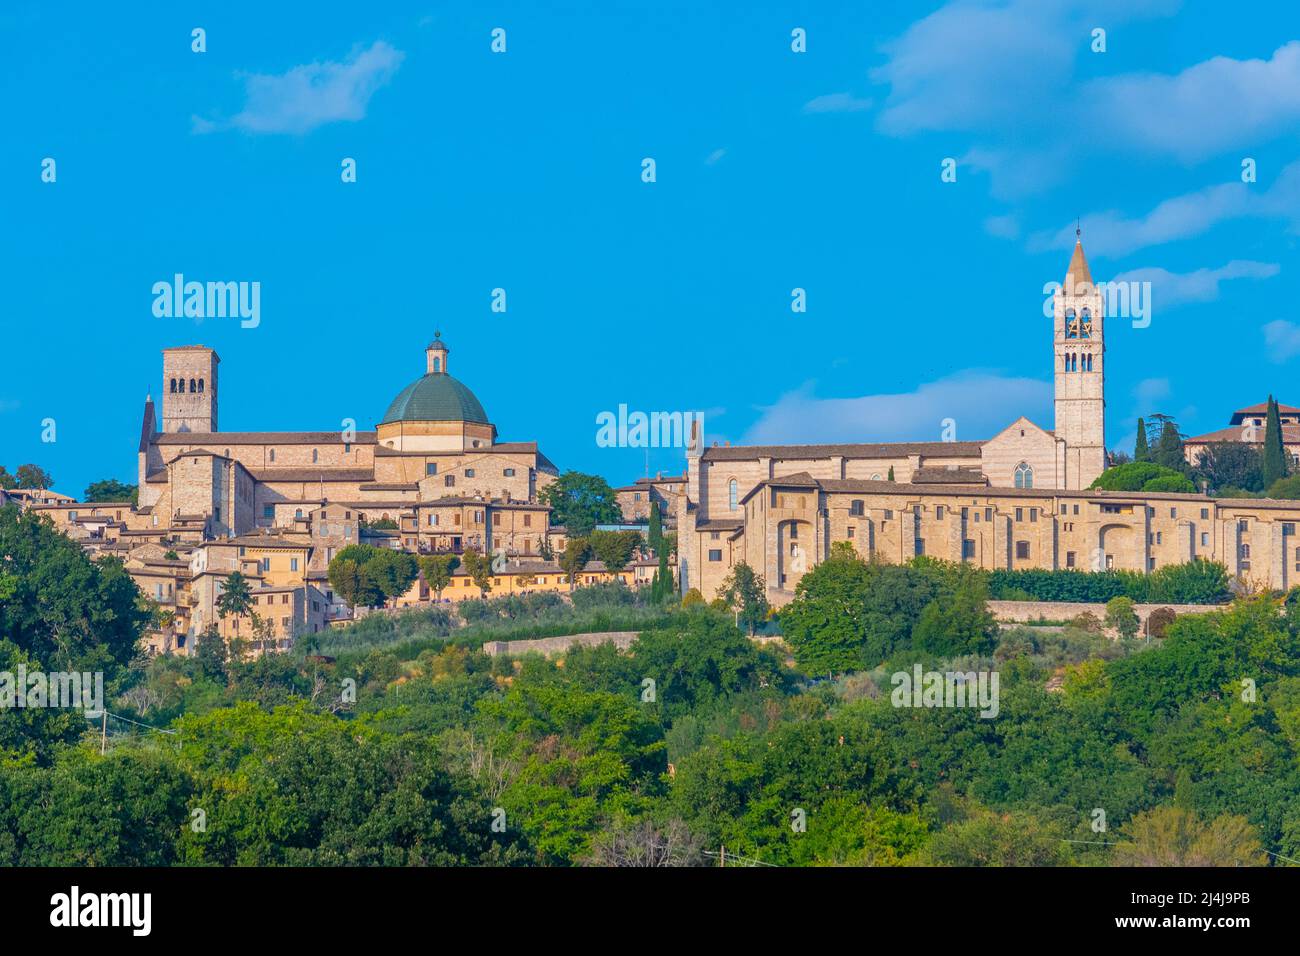 Basilica di Santa Chiara and cathedral of San rufino in Italian town Assisi. Stock Photo